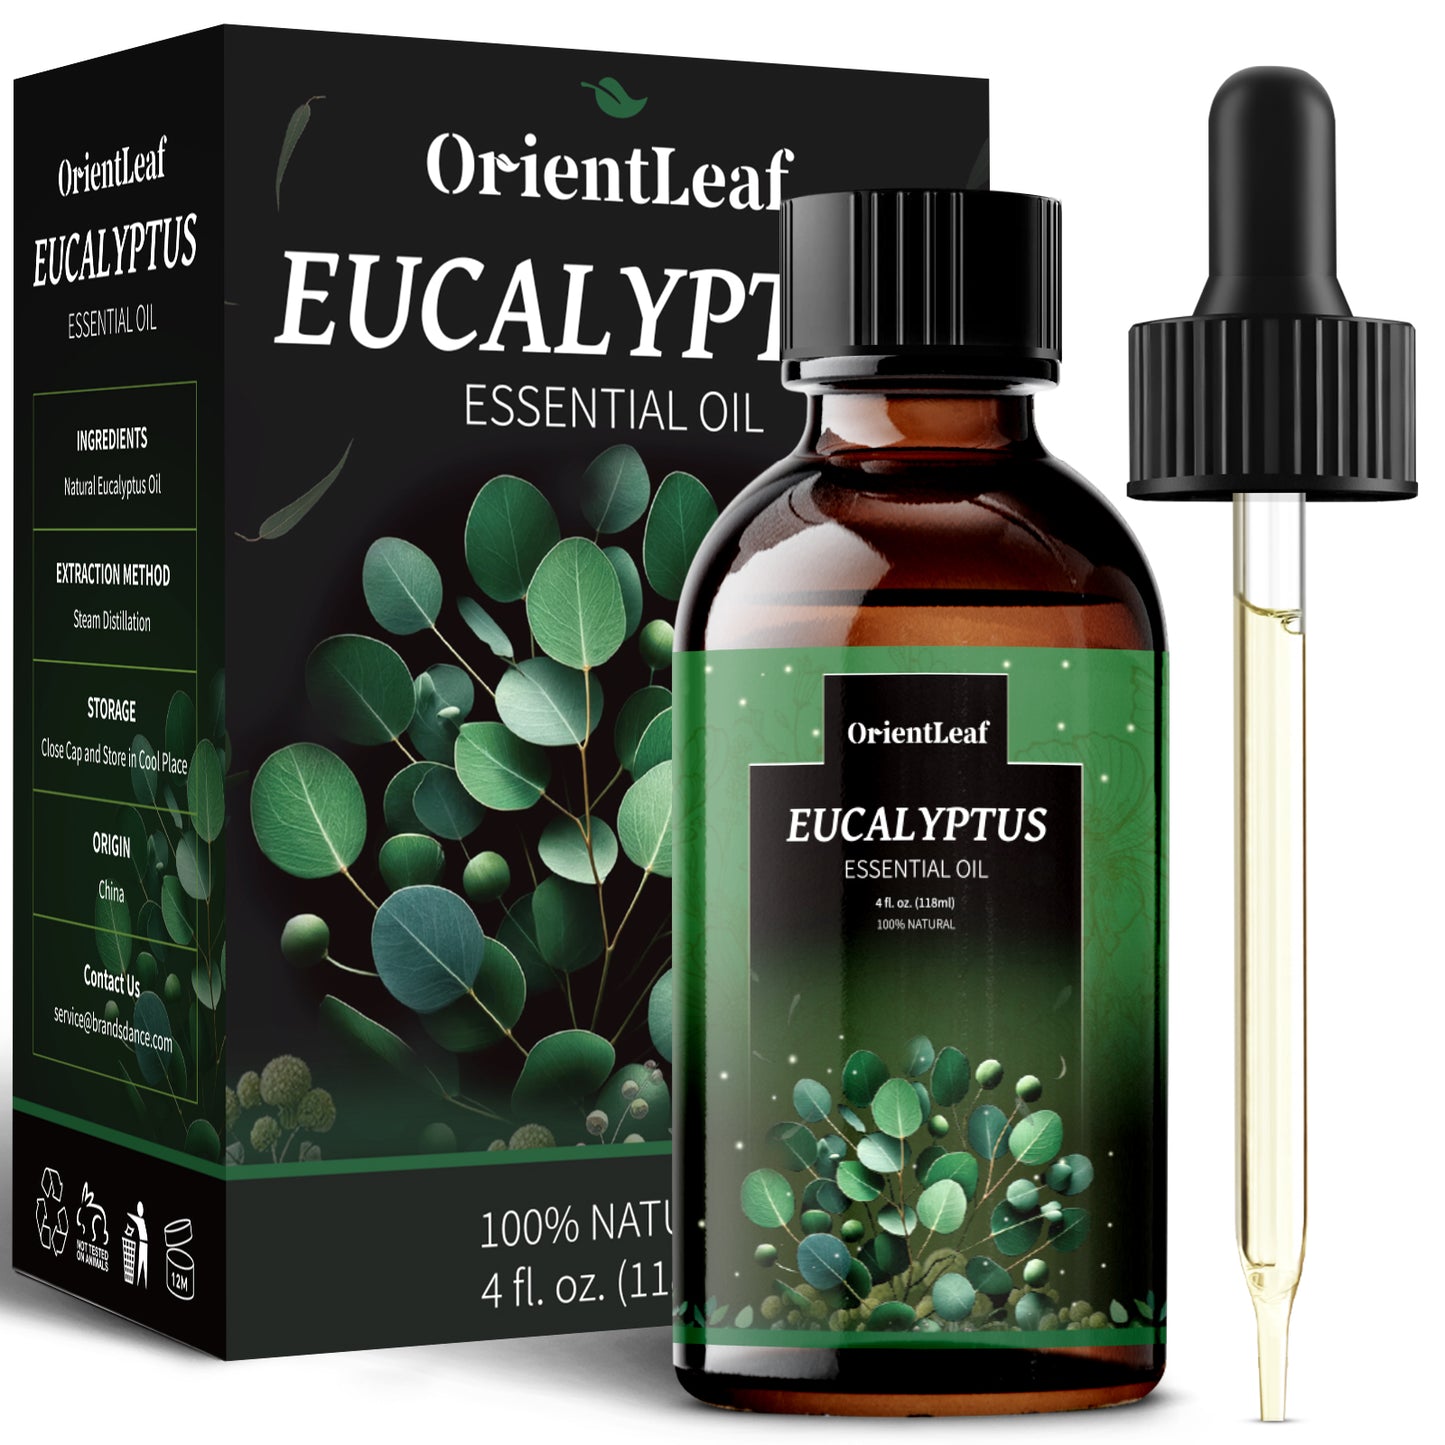 OrientLeaf Pure Lavender Essential Oil for Skin Hair Diffuser Massage, 4 fl Oz